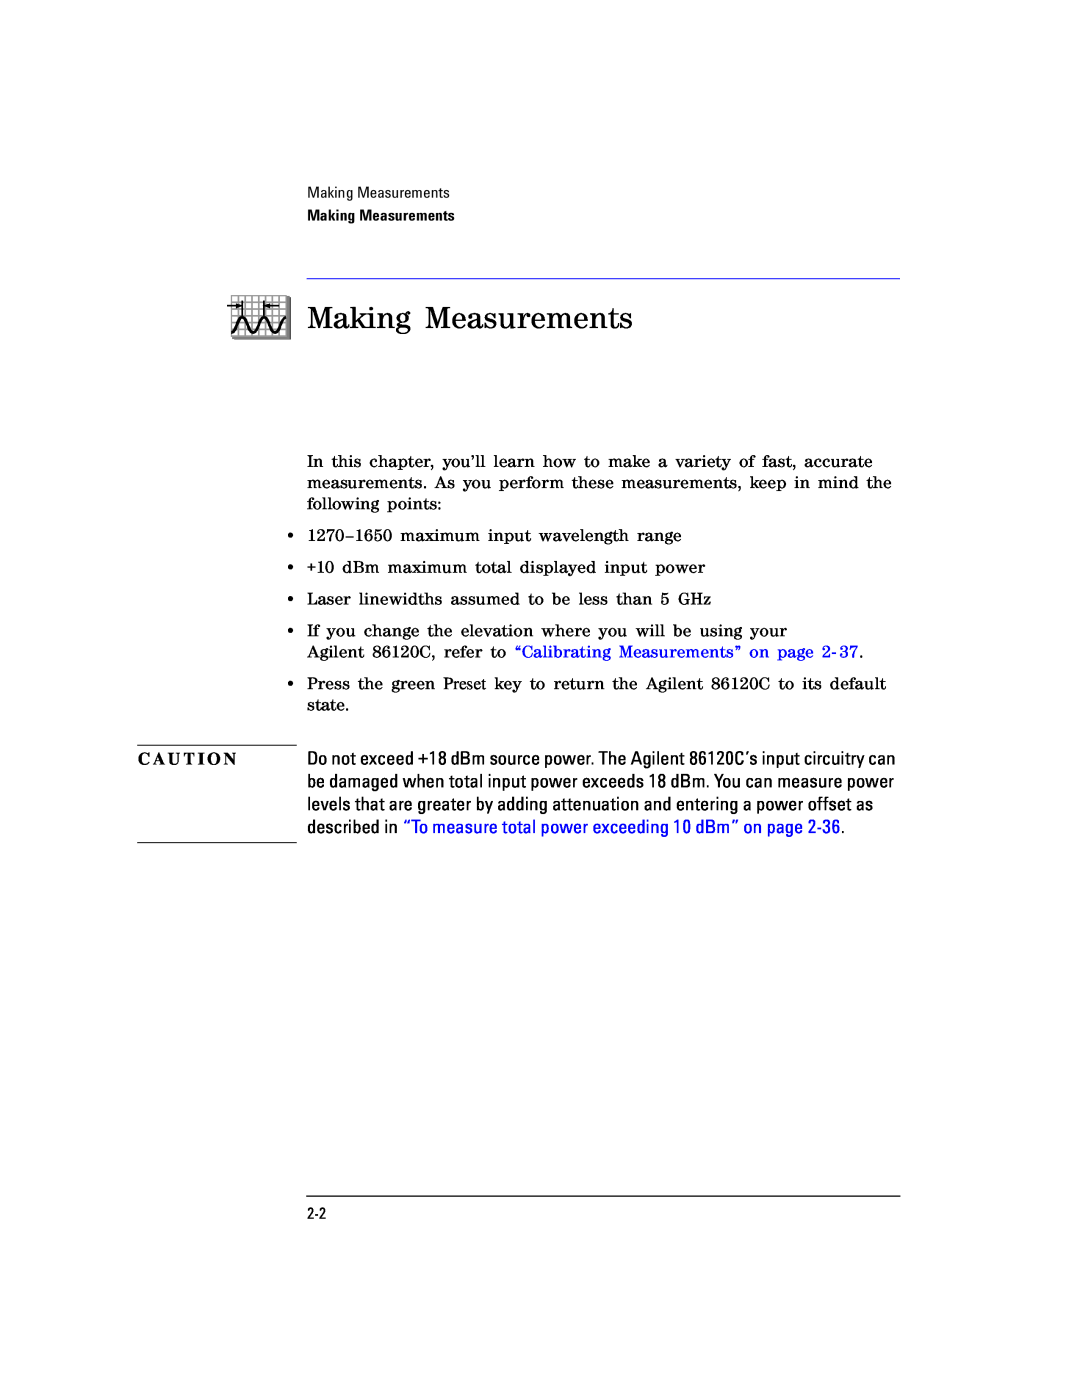 Agilent Technologies manual Making Measurements, Agilent 86120C, refer to “Calibrating Measurements” on page 2 